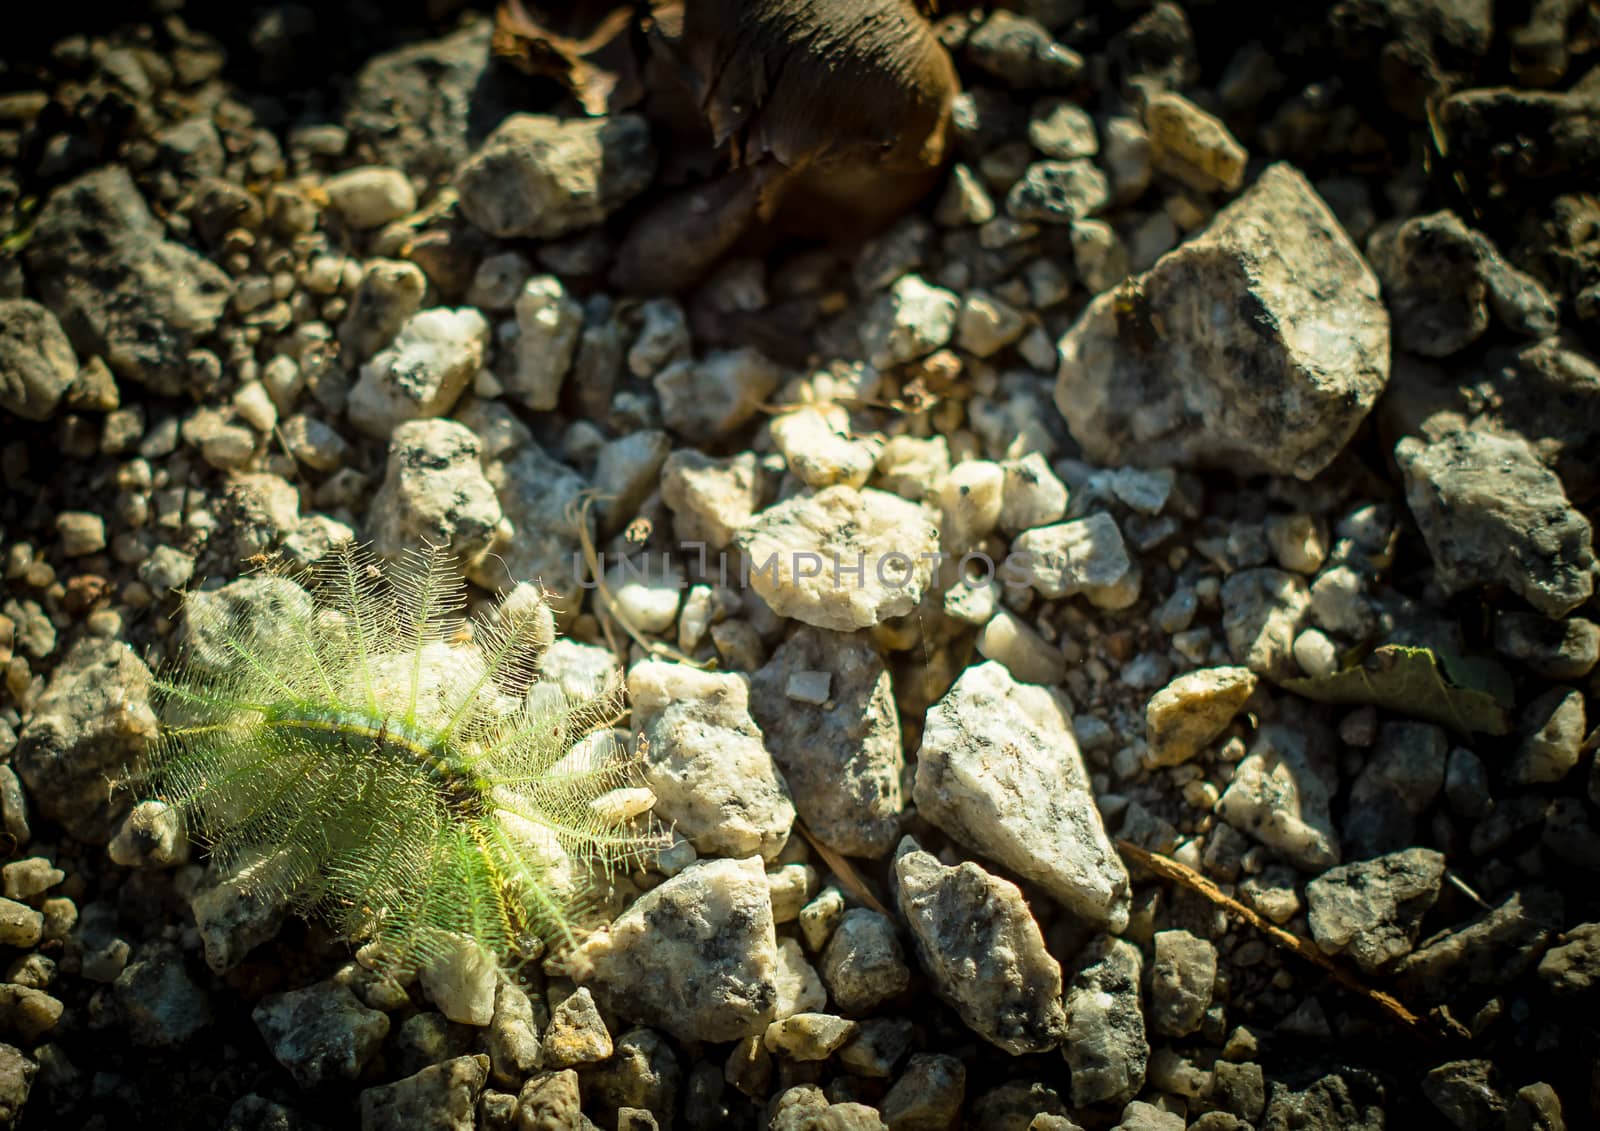 Nettle Caterpillar on the rock by domonite